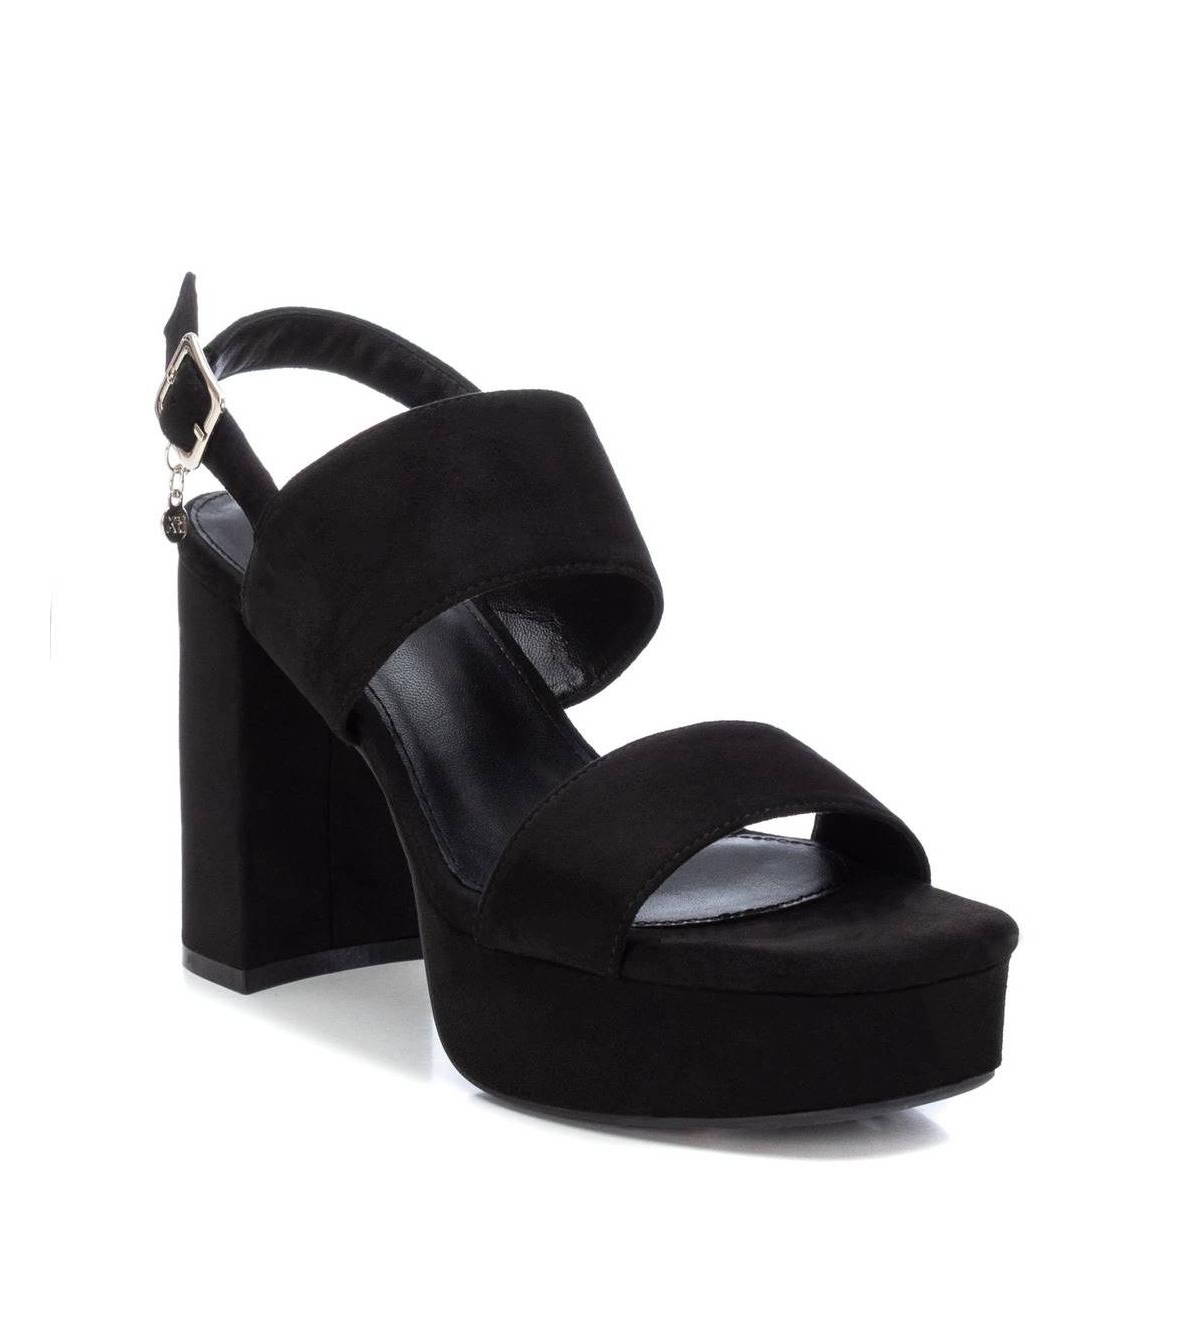 Women's Heeled Suede Sandals With Platform By Xti, Black - Black